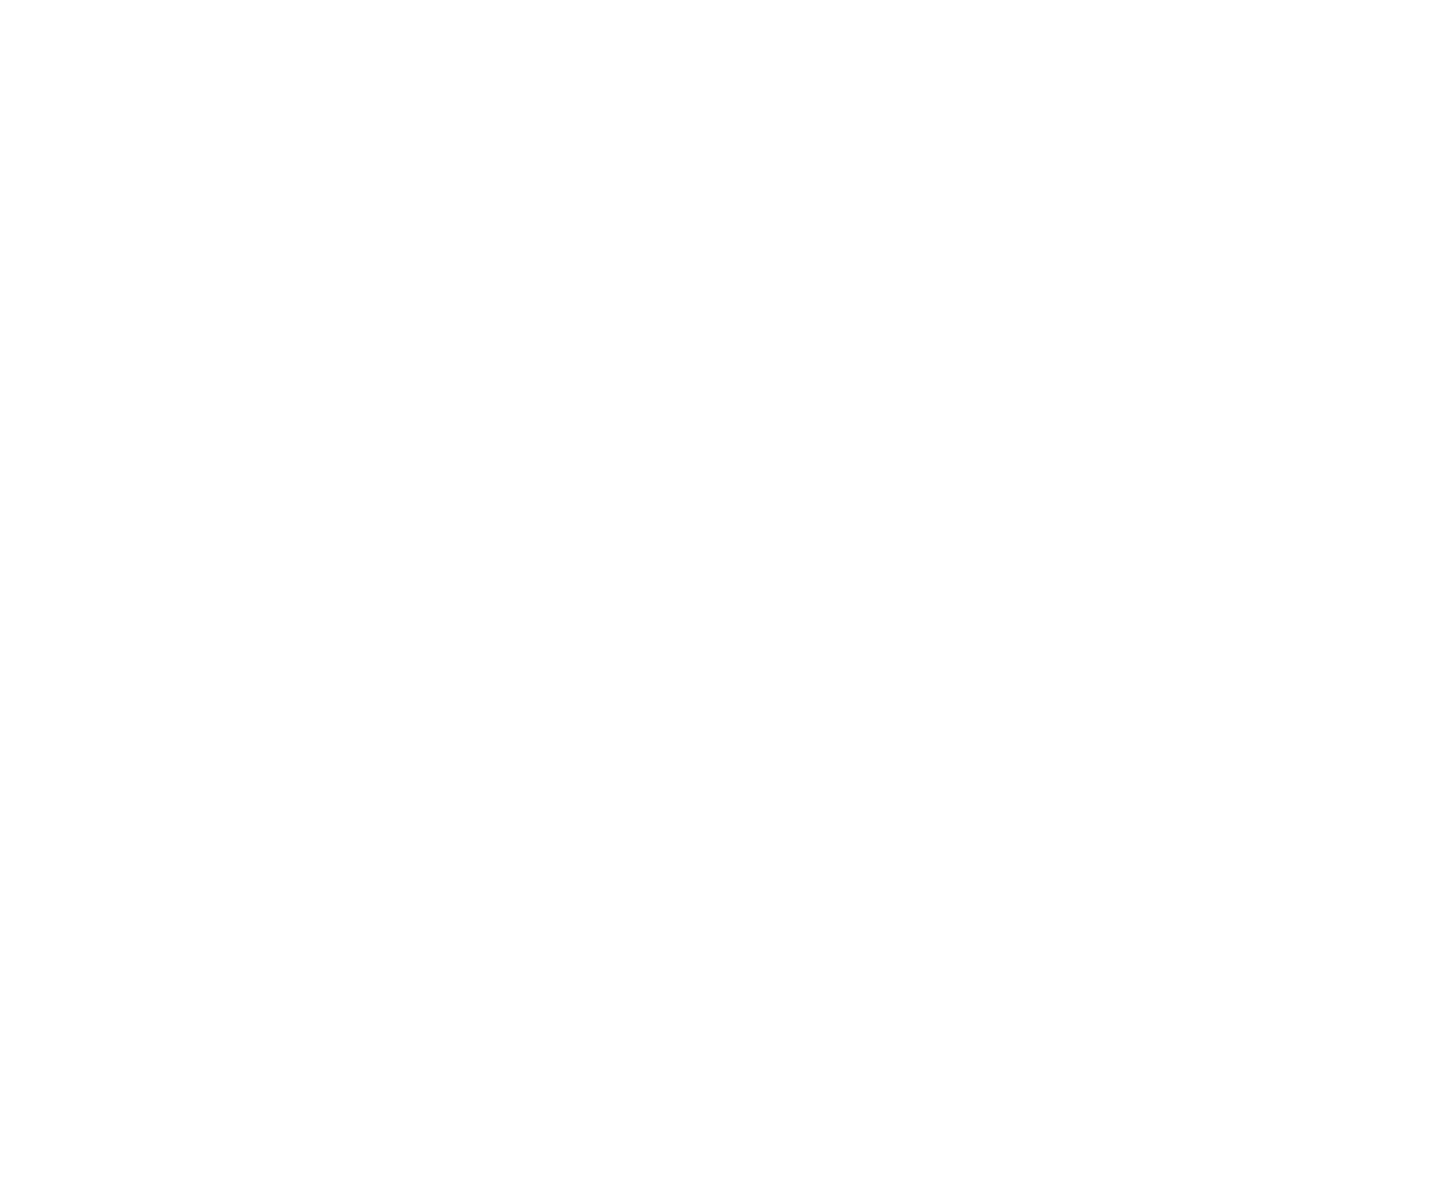 Humatics